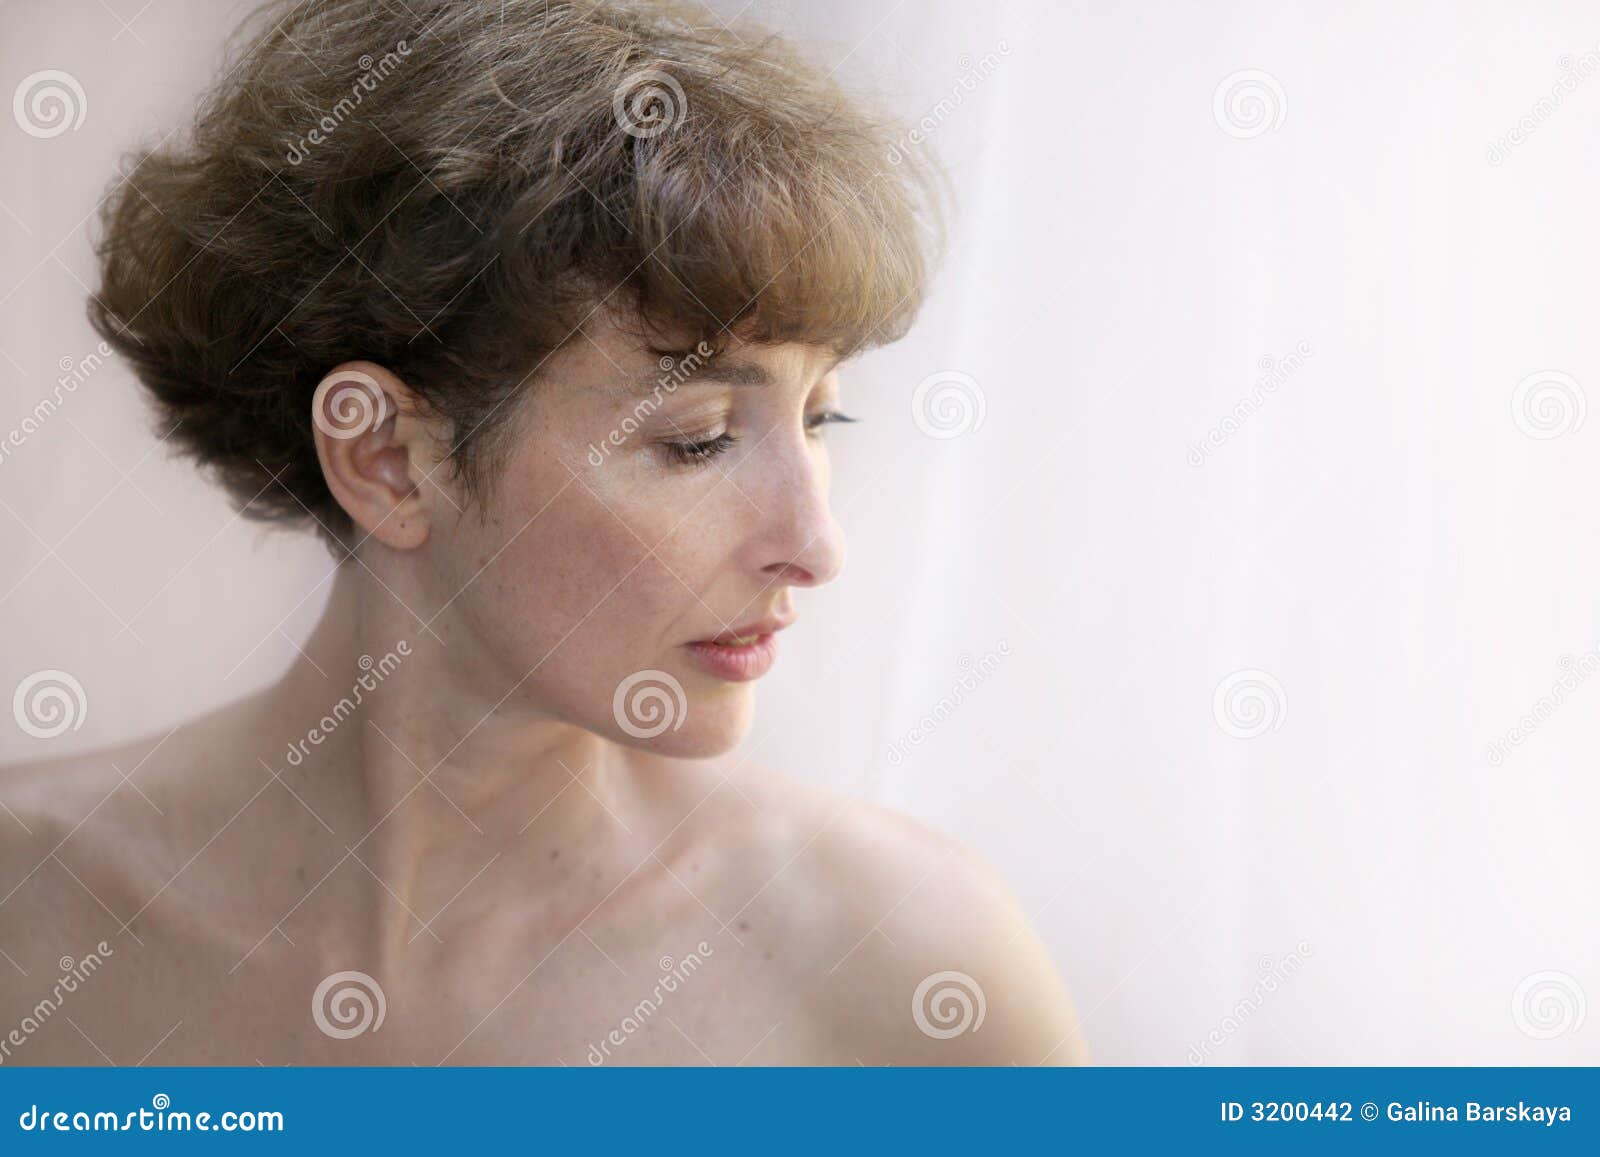 Topless Woman In Lingerie Stock Photo Cartoondealer Com 39557238